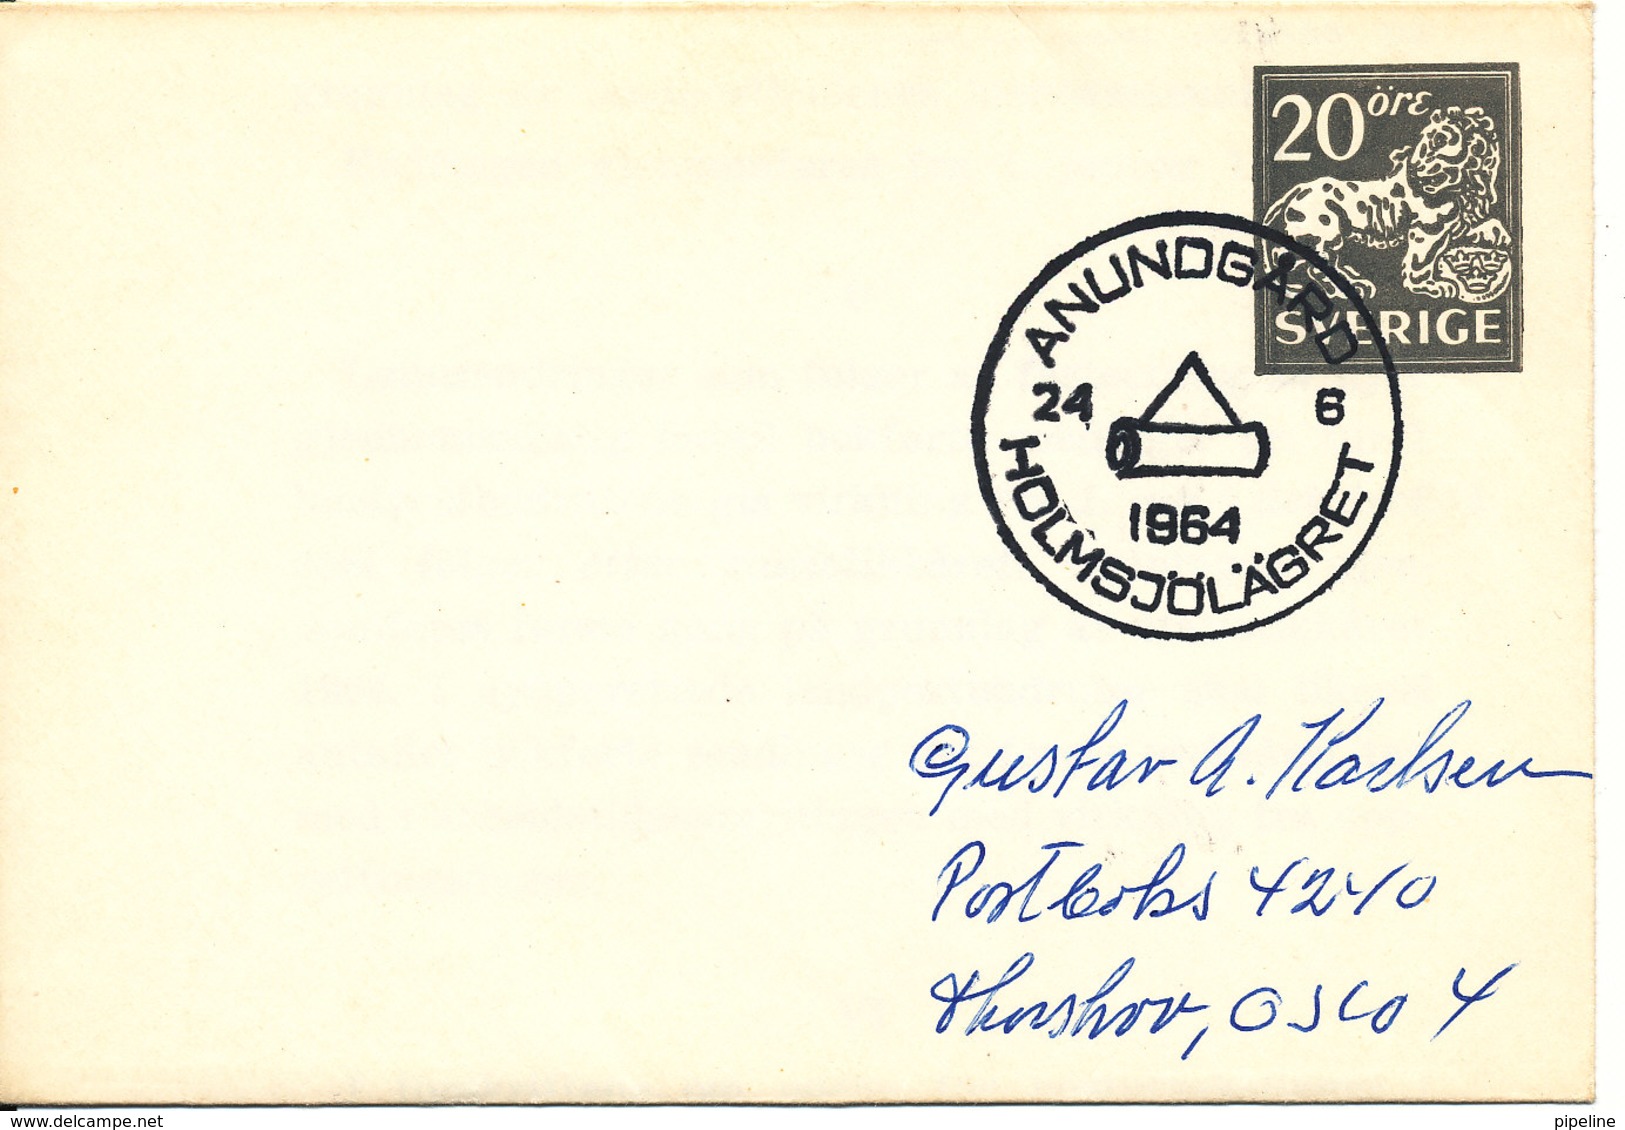 Sweden Small Postal Stationery Cover With Special Postmark Holmsjölägret Anundgard 24-6-1964 - Postal Stationery